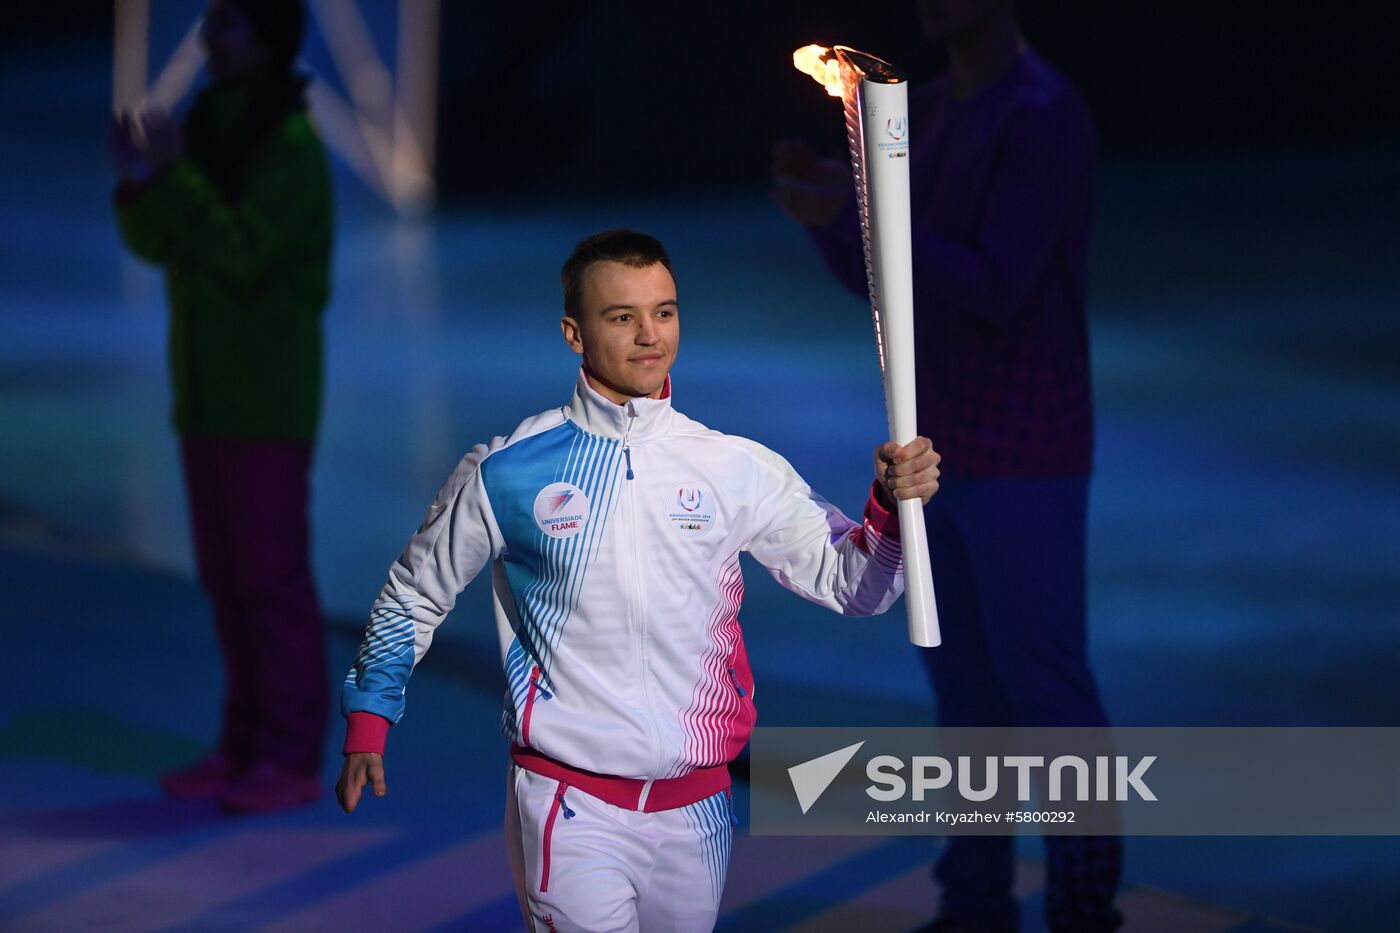 Russia Universiade Opening Ceremony